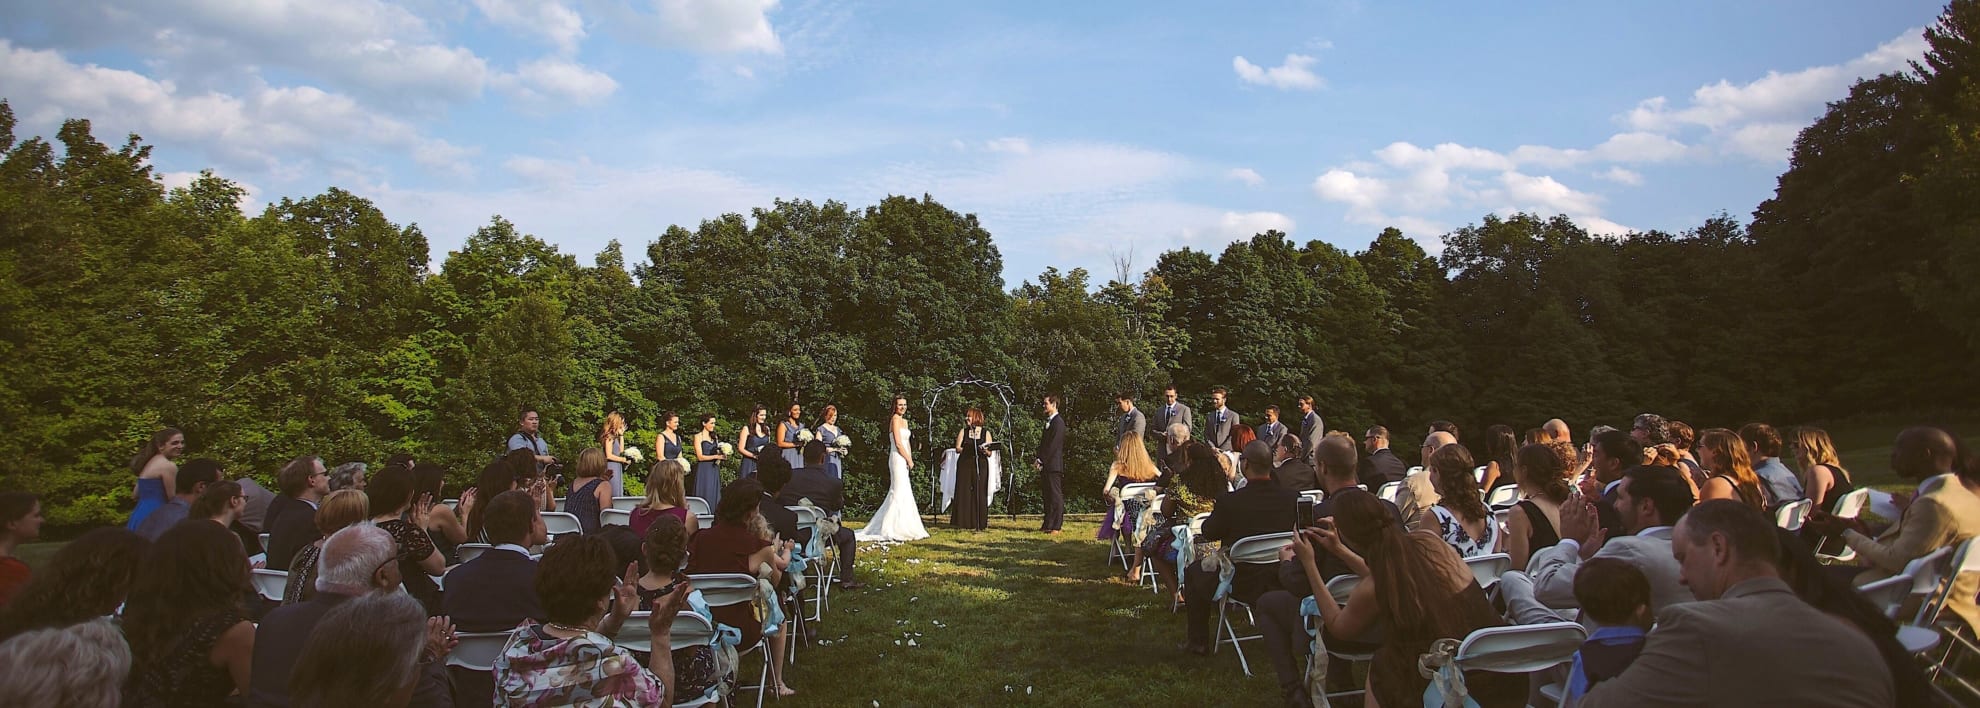 Panorama of outdoor wedding ceremony.